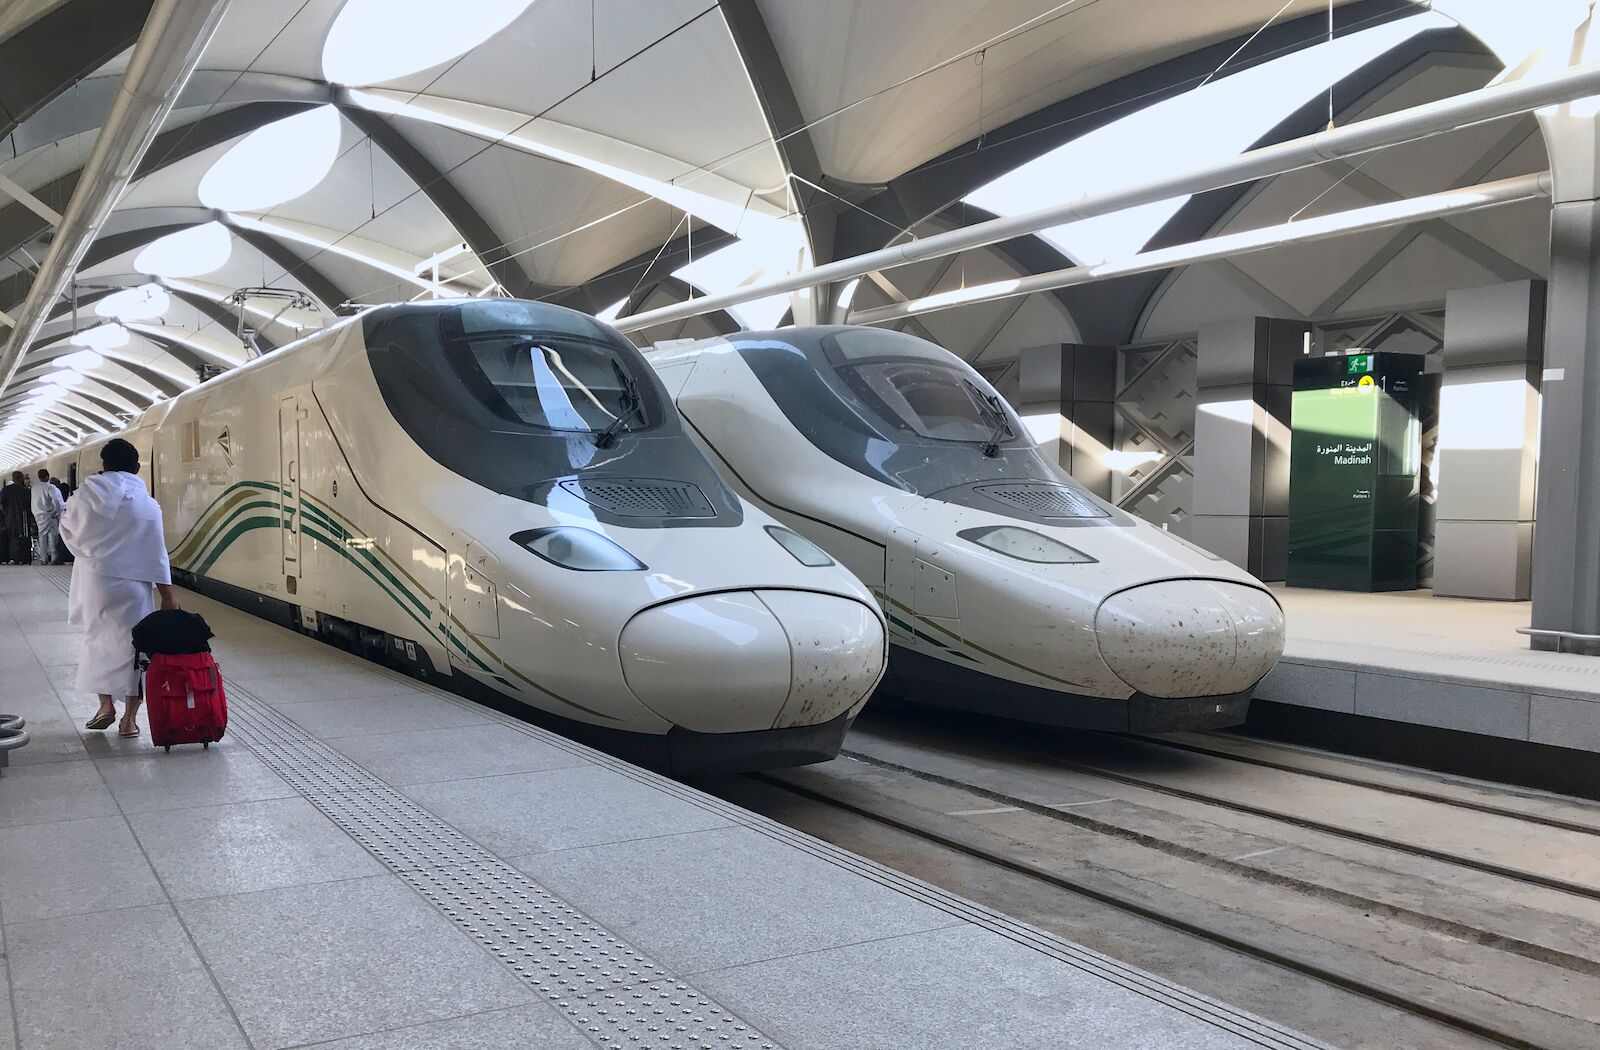 Haramain train in Saudi Arabia